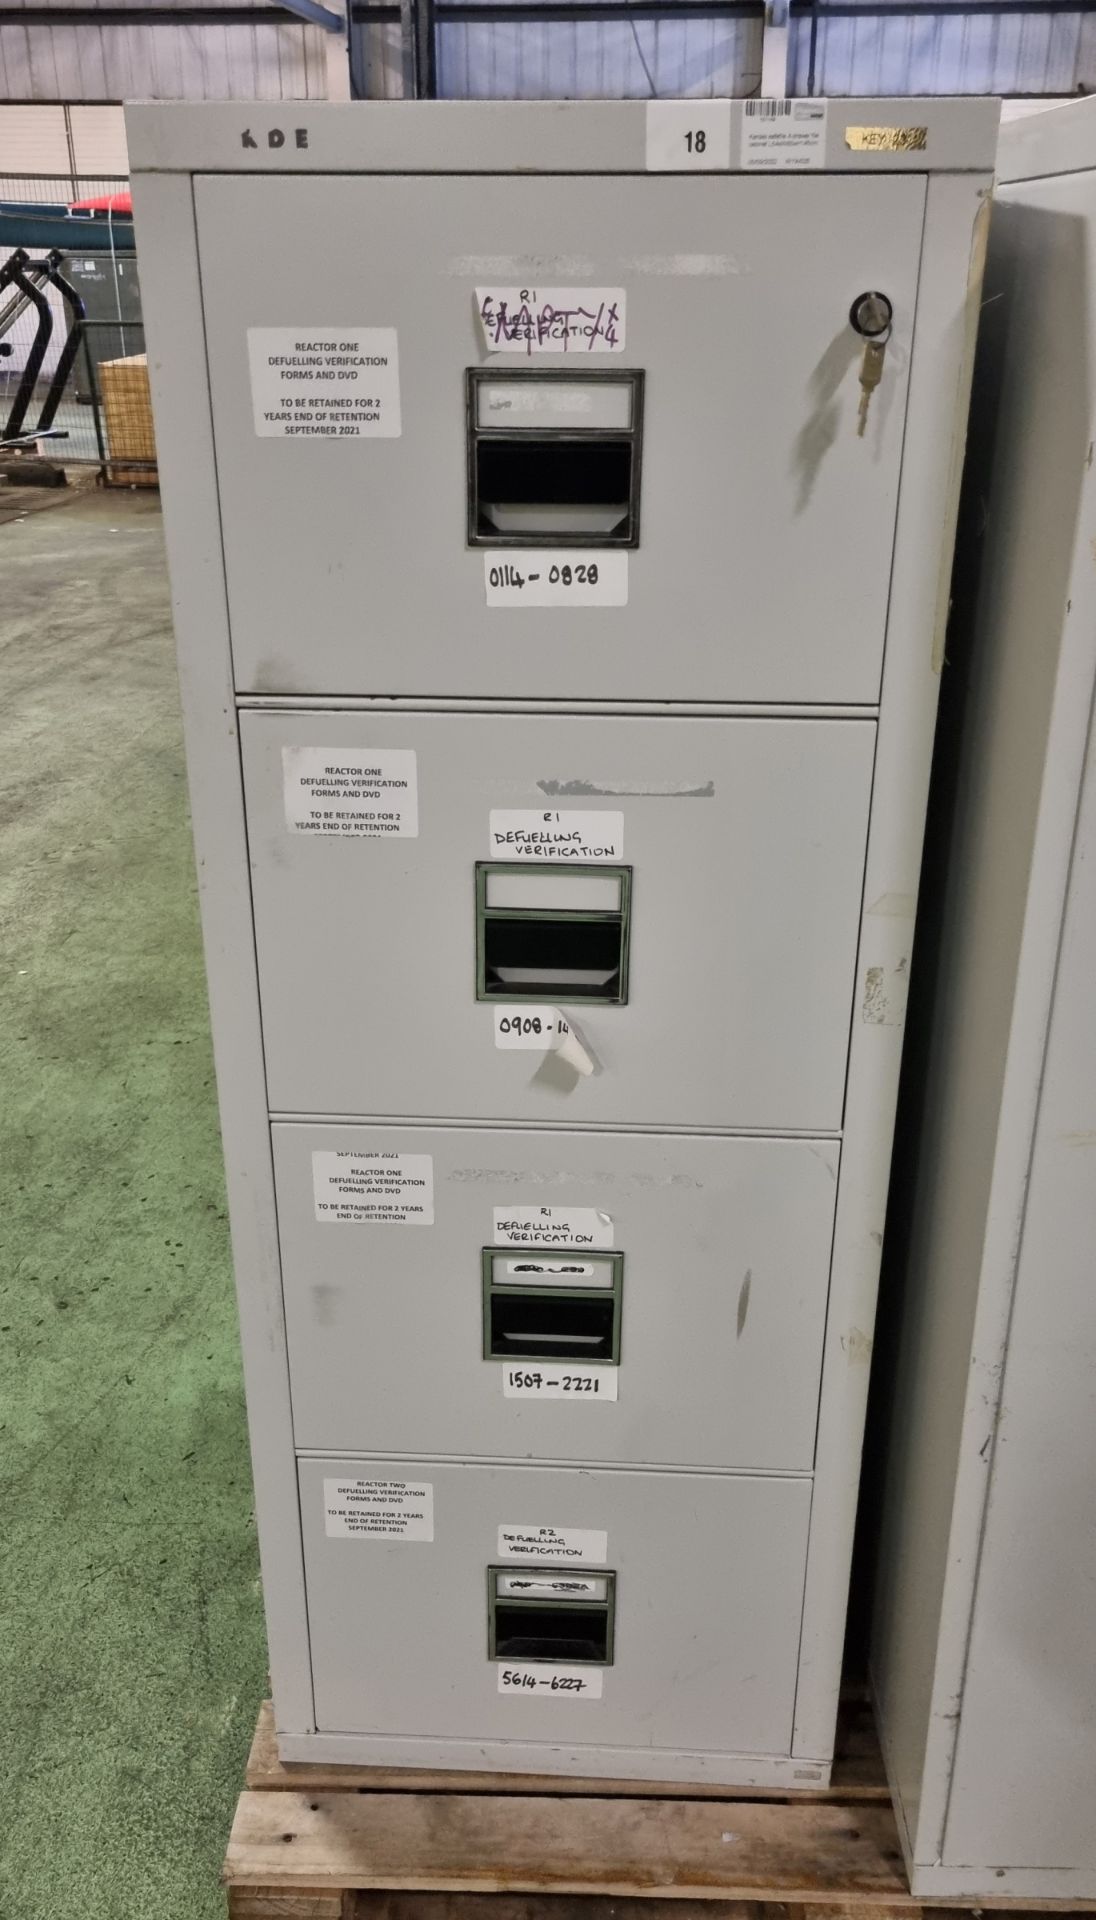 Kardex safefile 4-drawer file cabinet L54xW80xH145cm